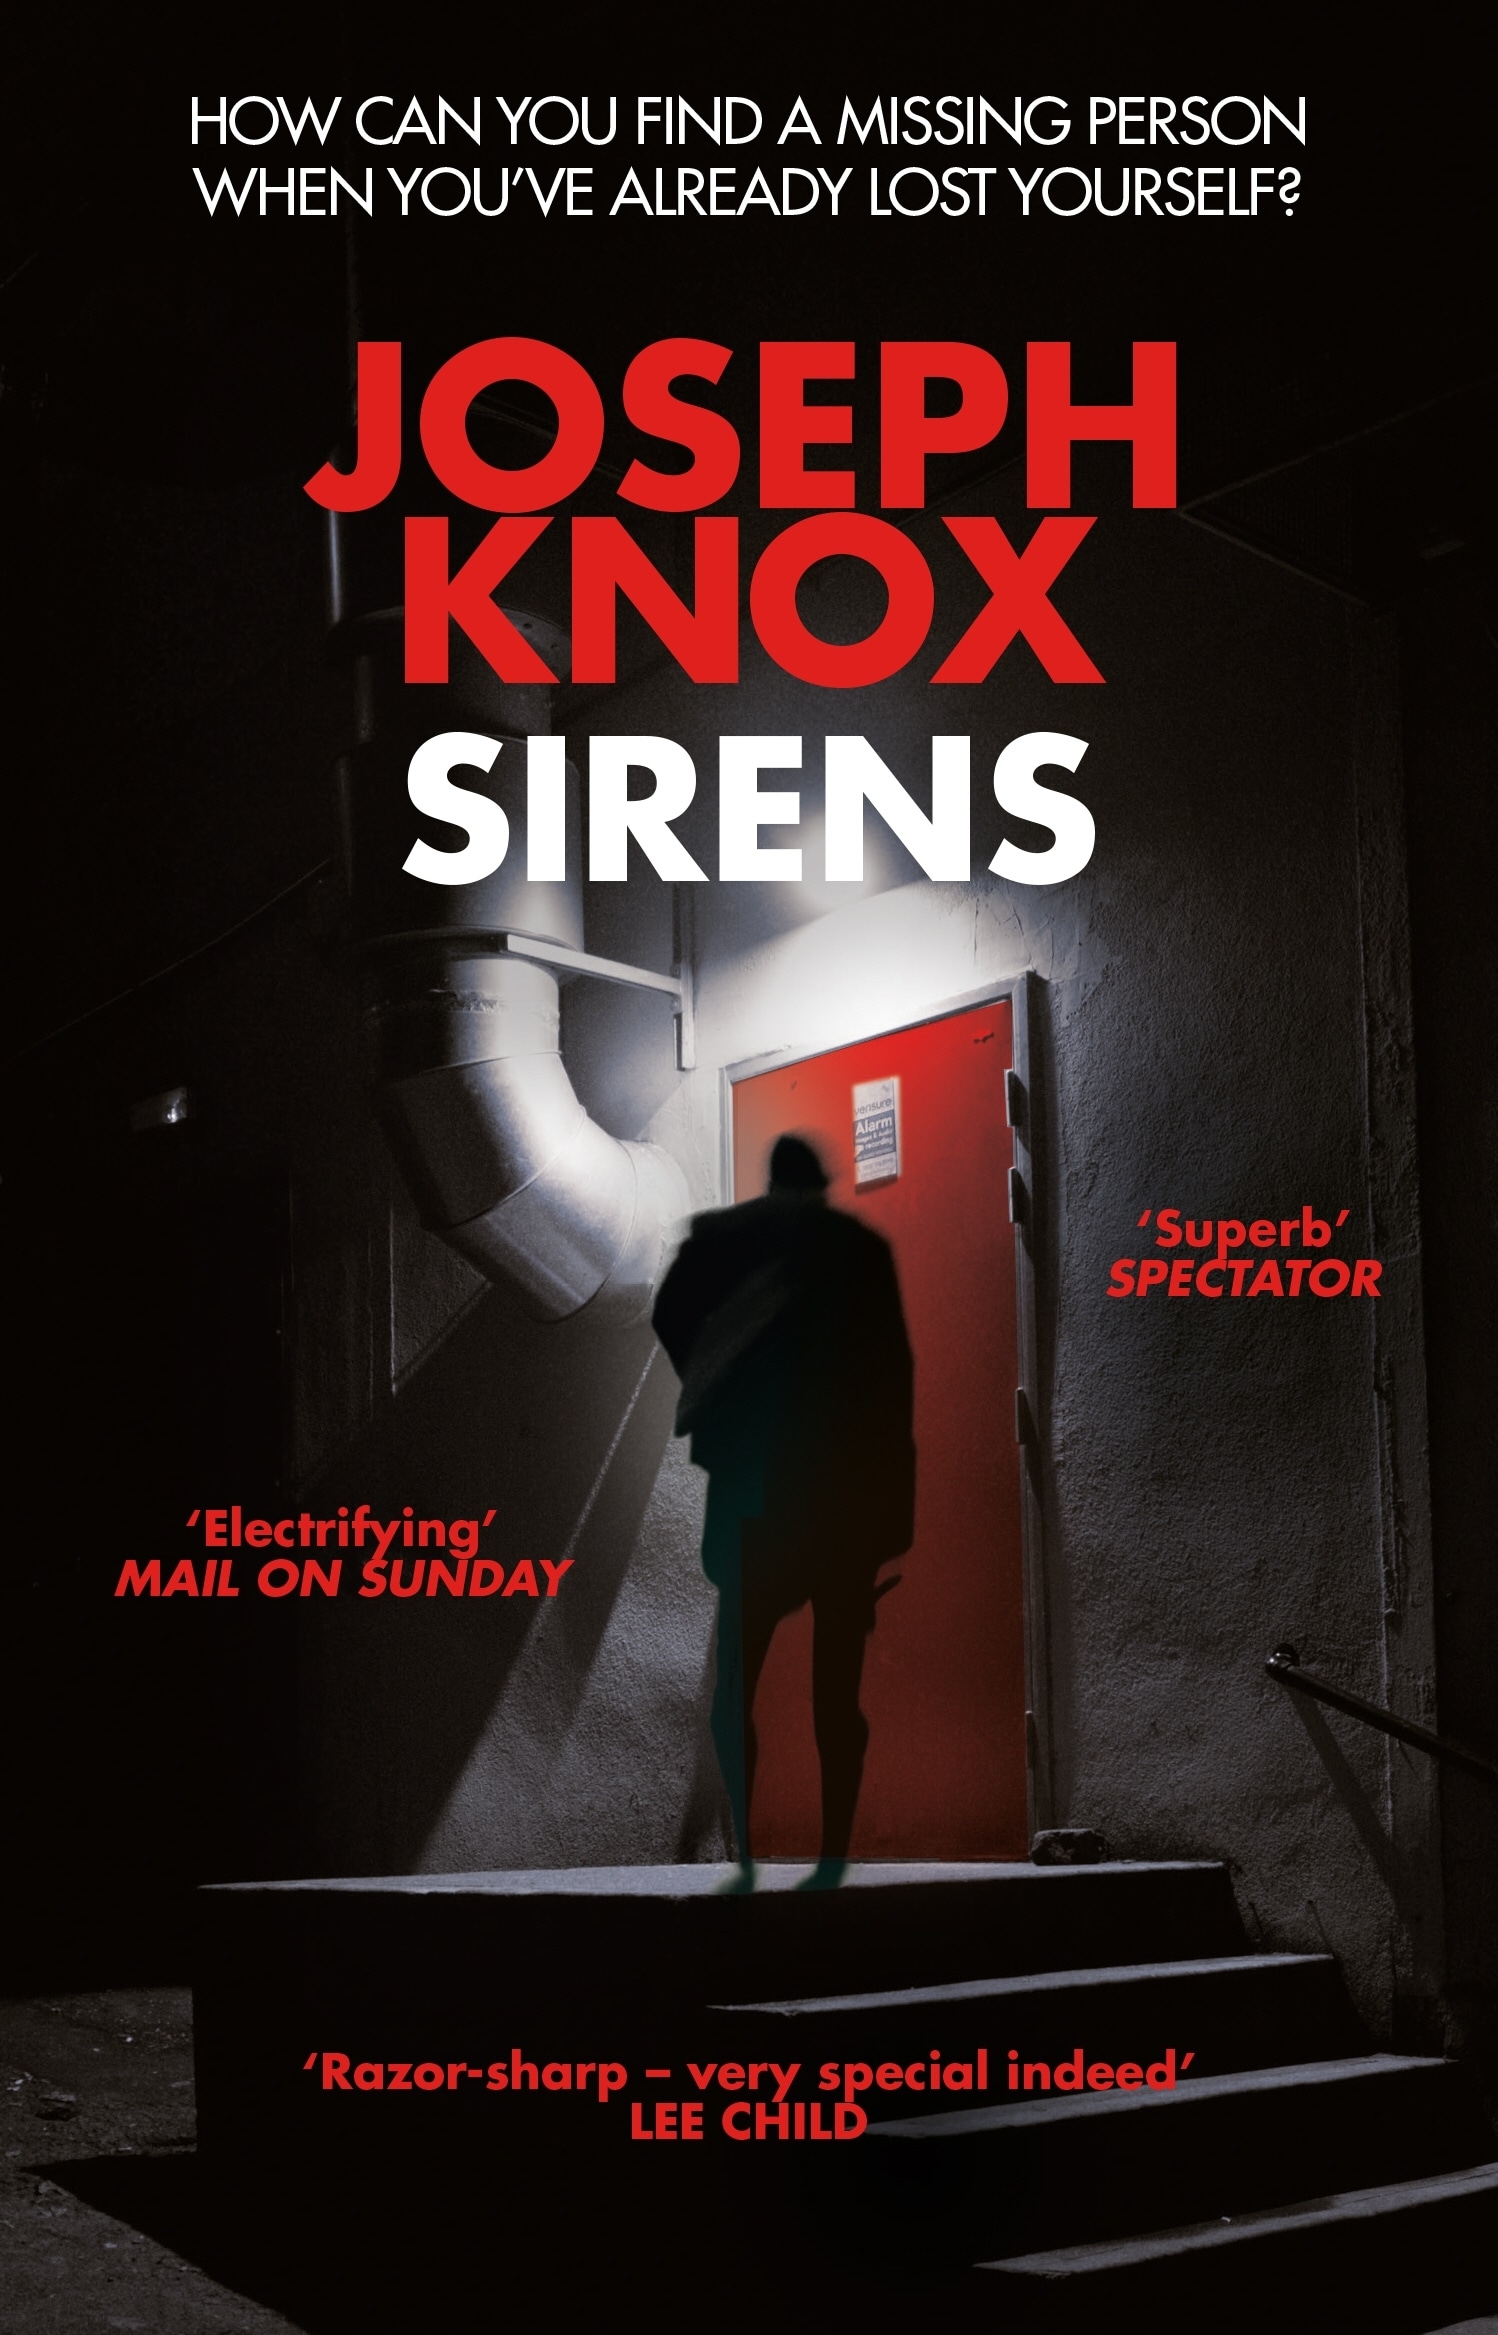 Book “Sirens” by Joseph Knox — December 28, 2017